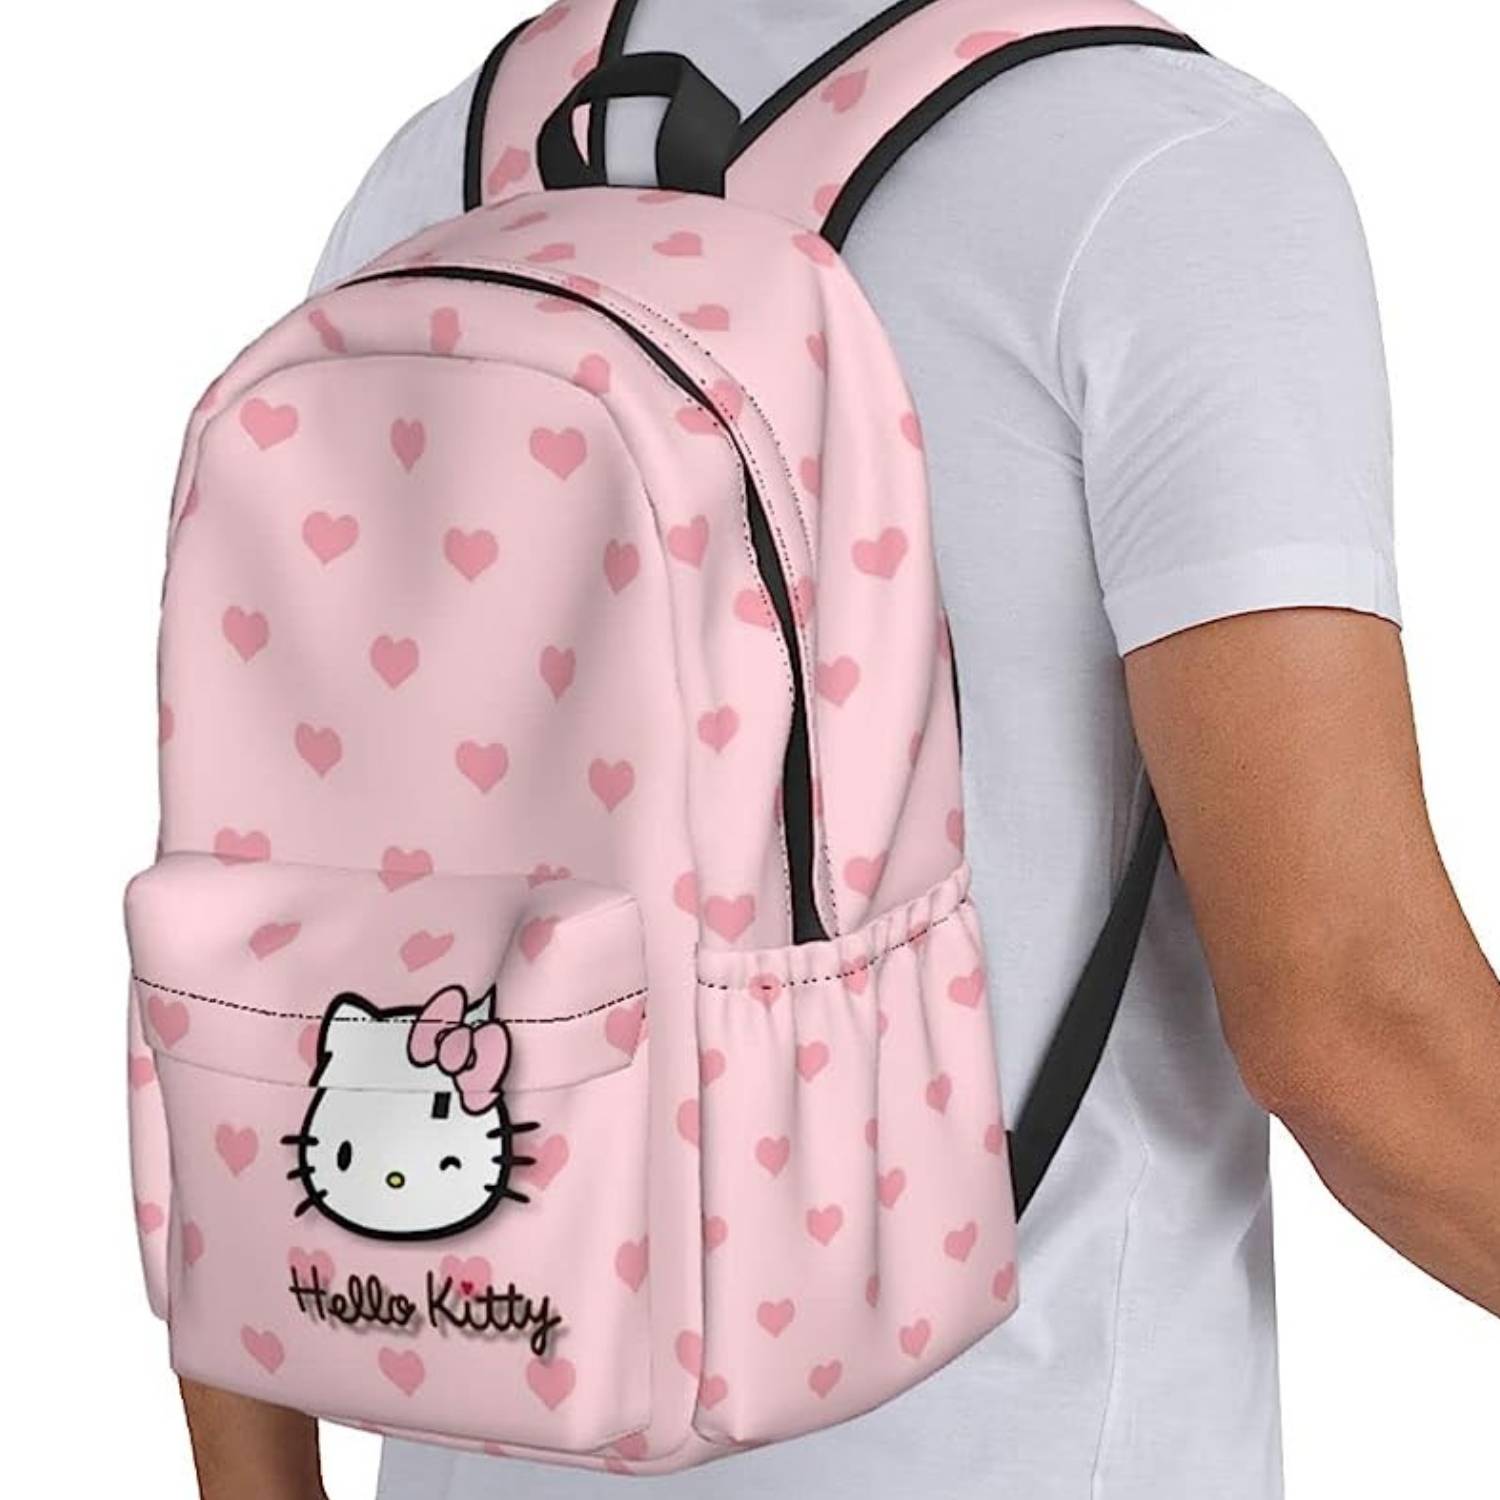 buy hello kitty travel backpack